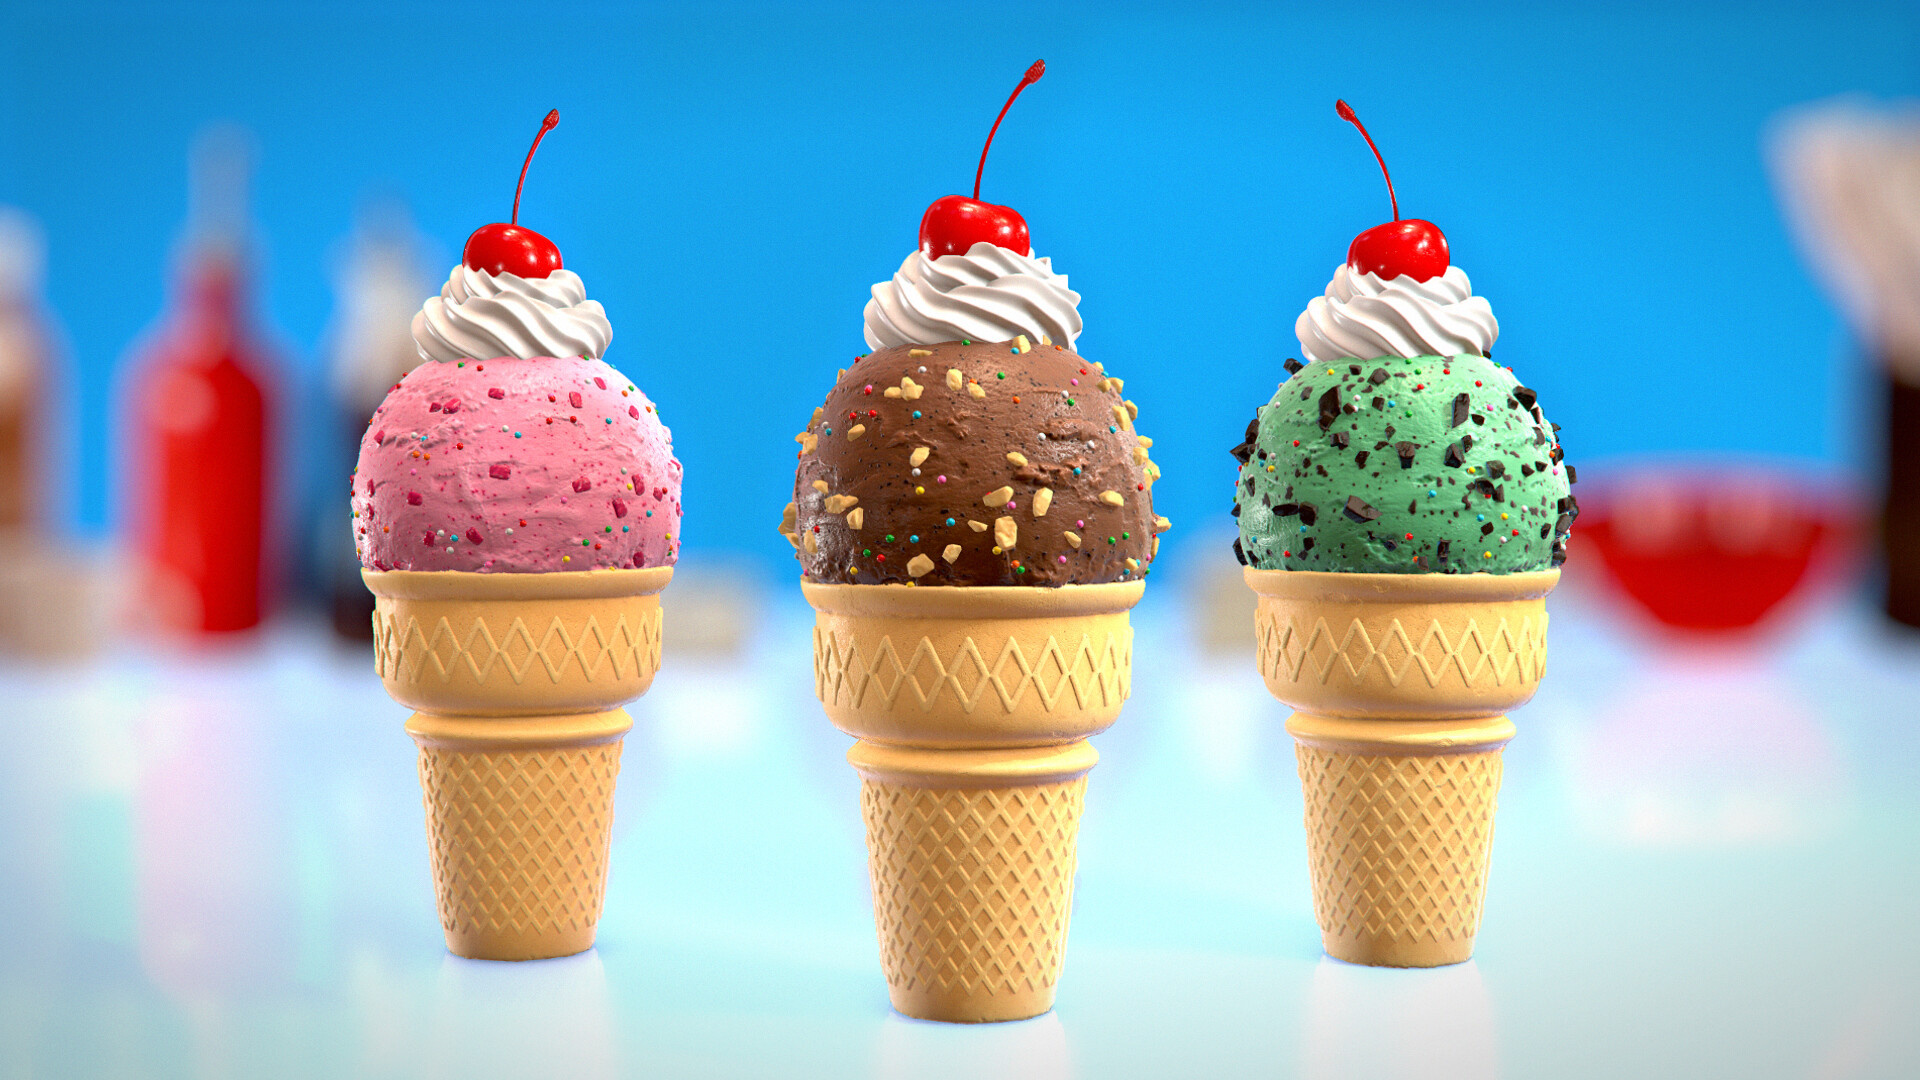 Artistic ice cream cones, Creative designs, Vibrant colors, Food art, 1920x1080 Full HD Desktop